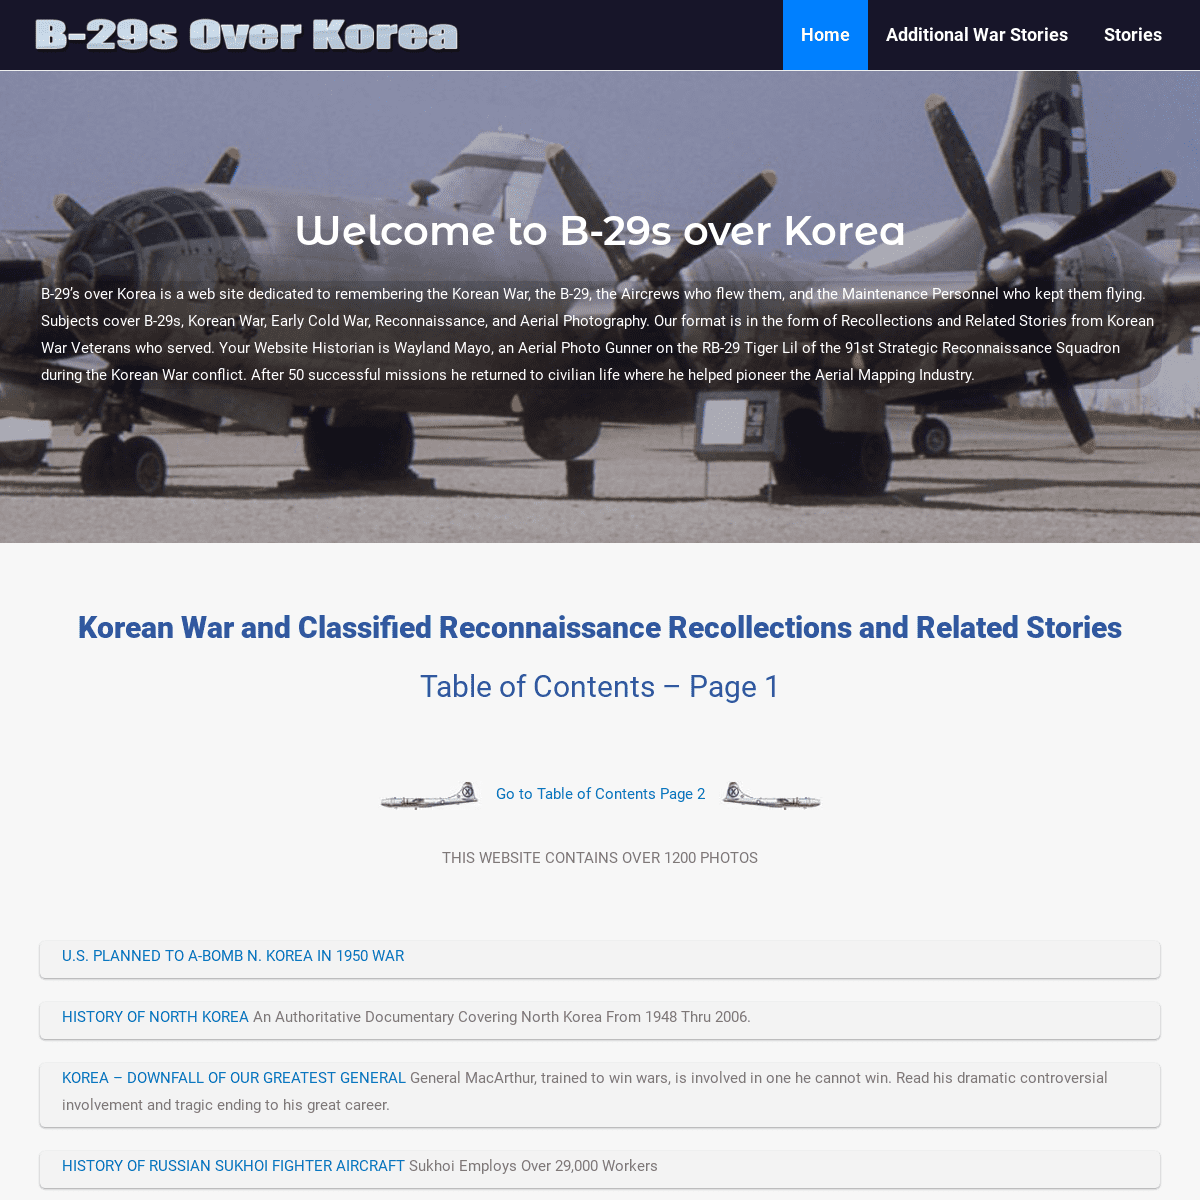 A complete backup of https://b-29s-over-korea.com